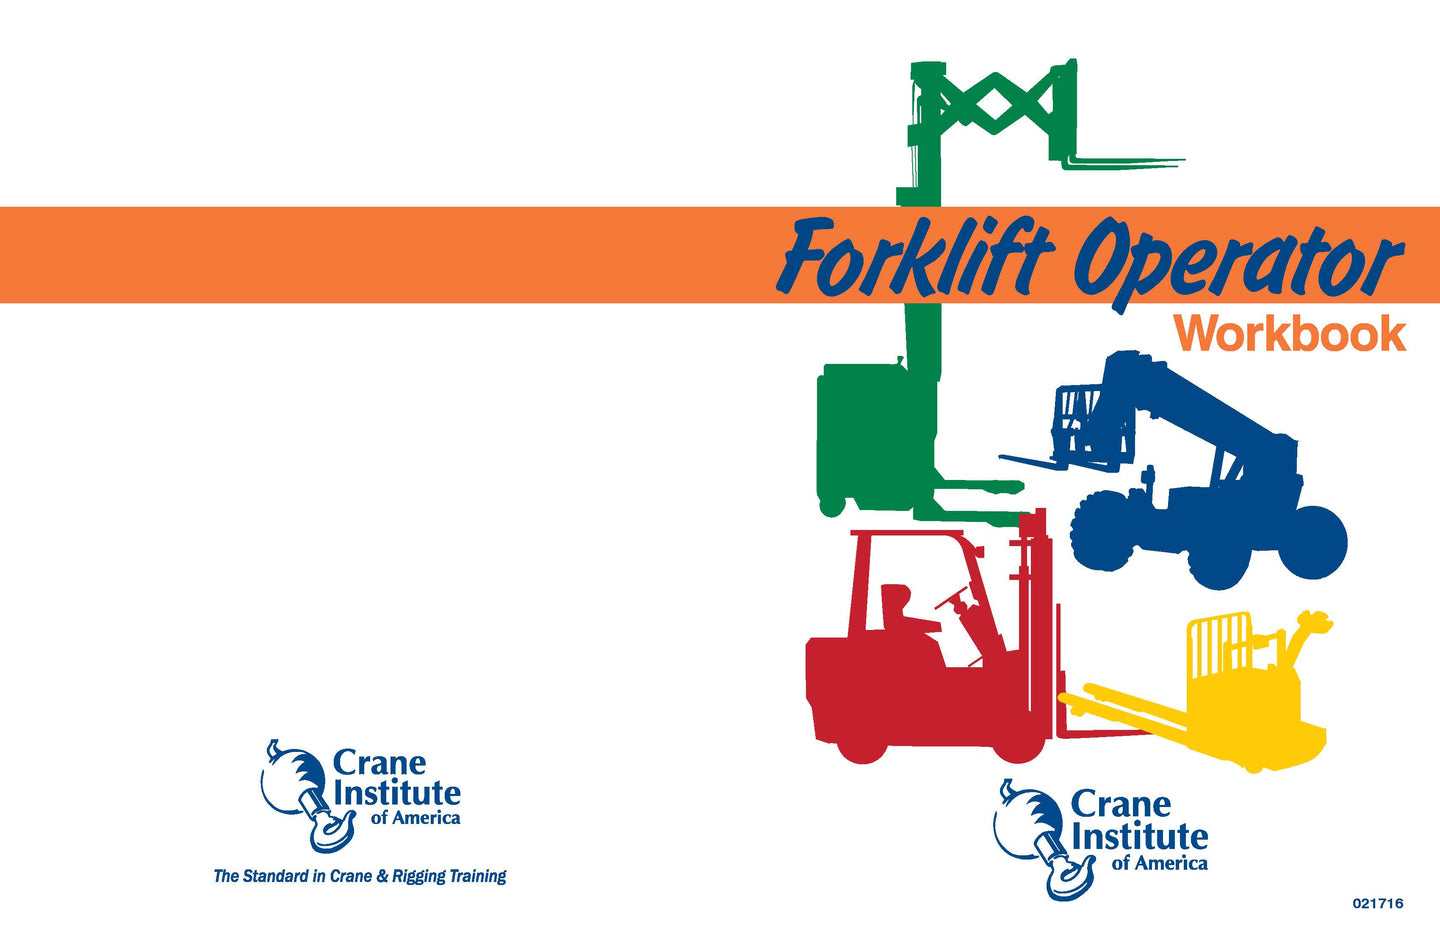 Forklift Operator Workbook